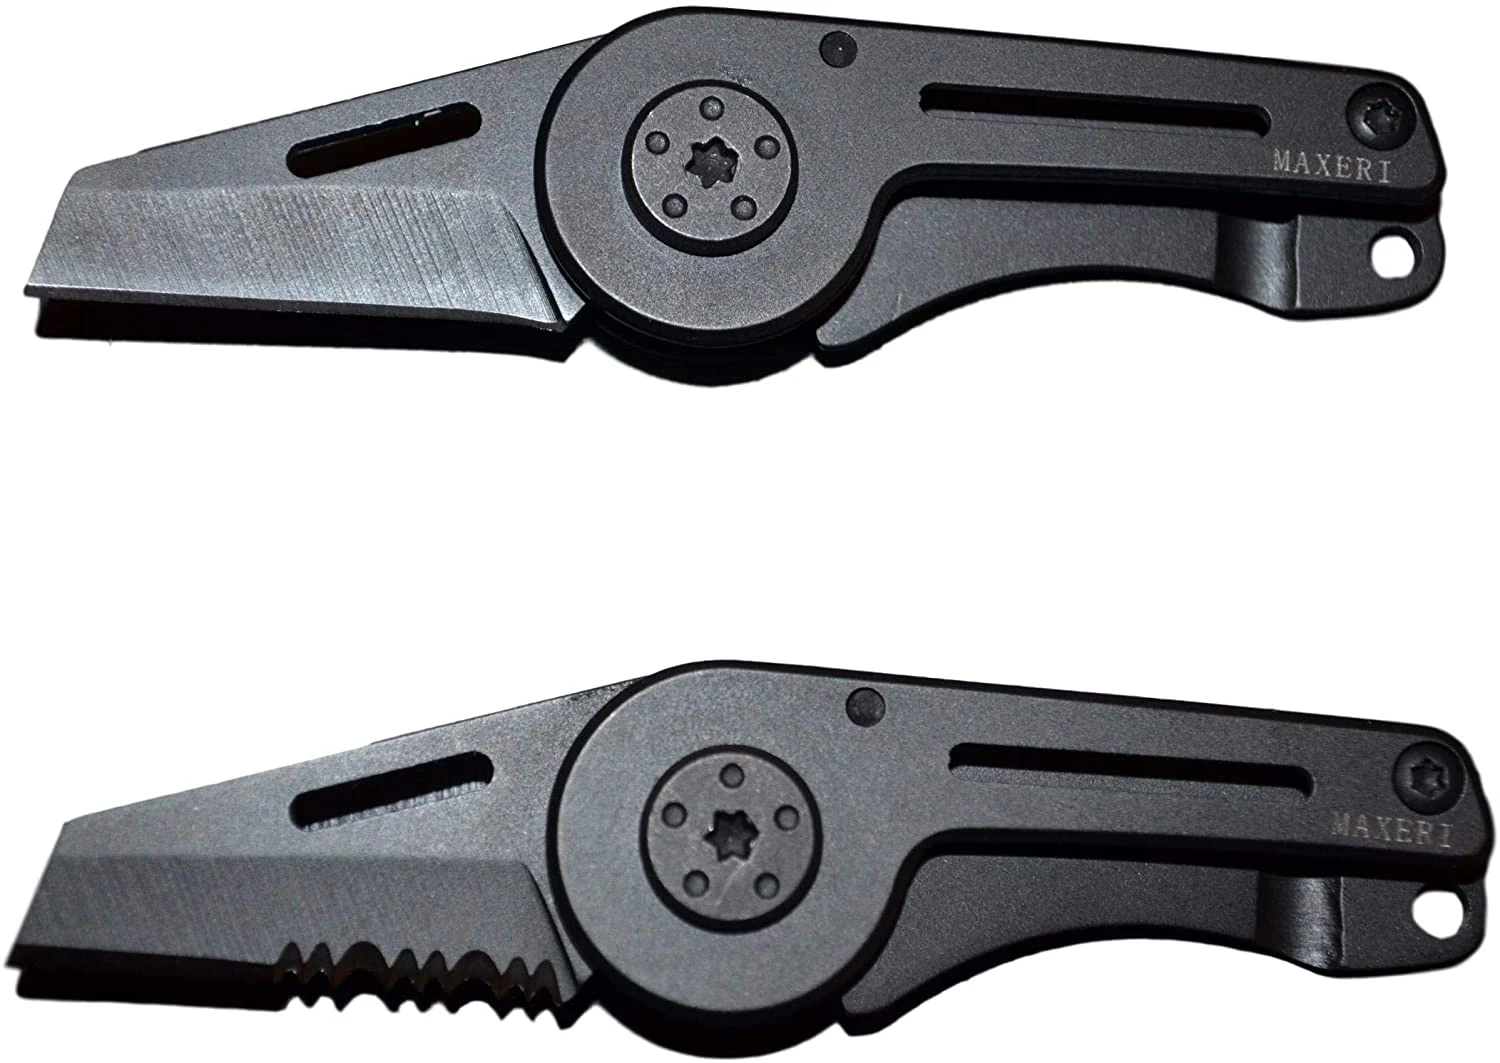 399B black color CED small folding knife